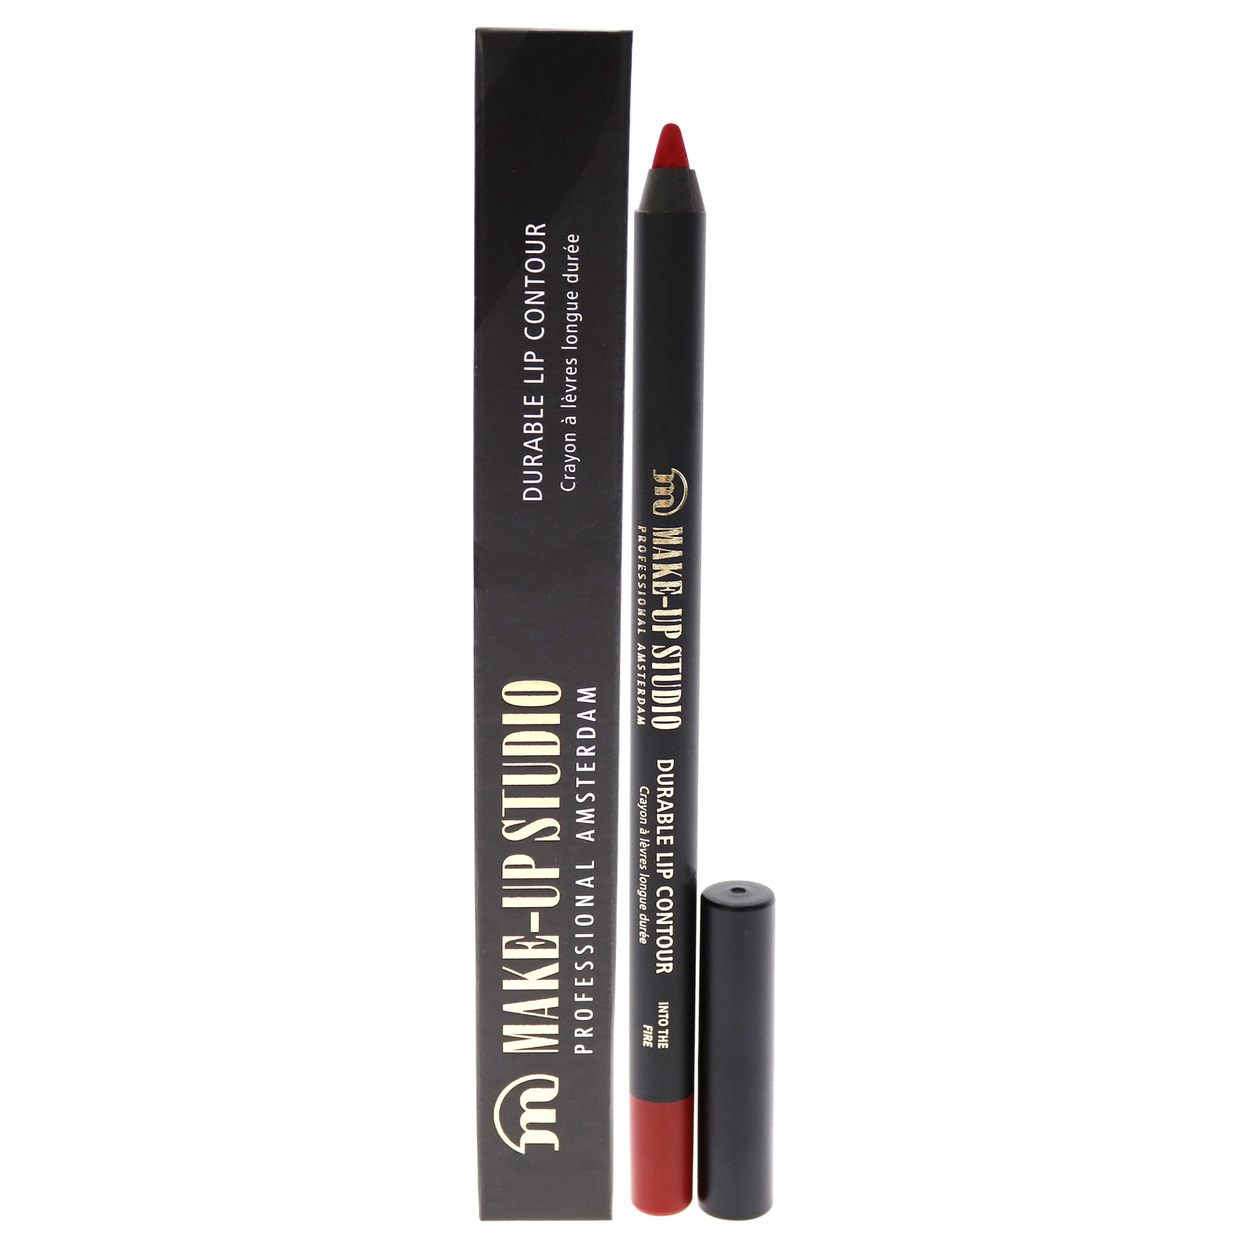 Make-Up Studio Durable Lip Contour - Into The Fire Lip Liner 0.04 Oz